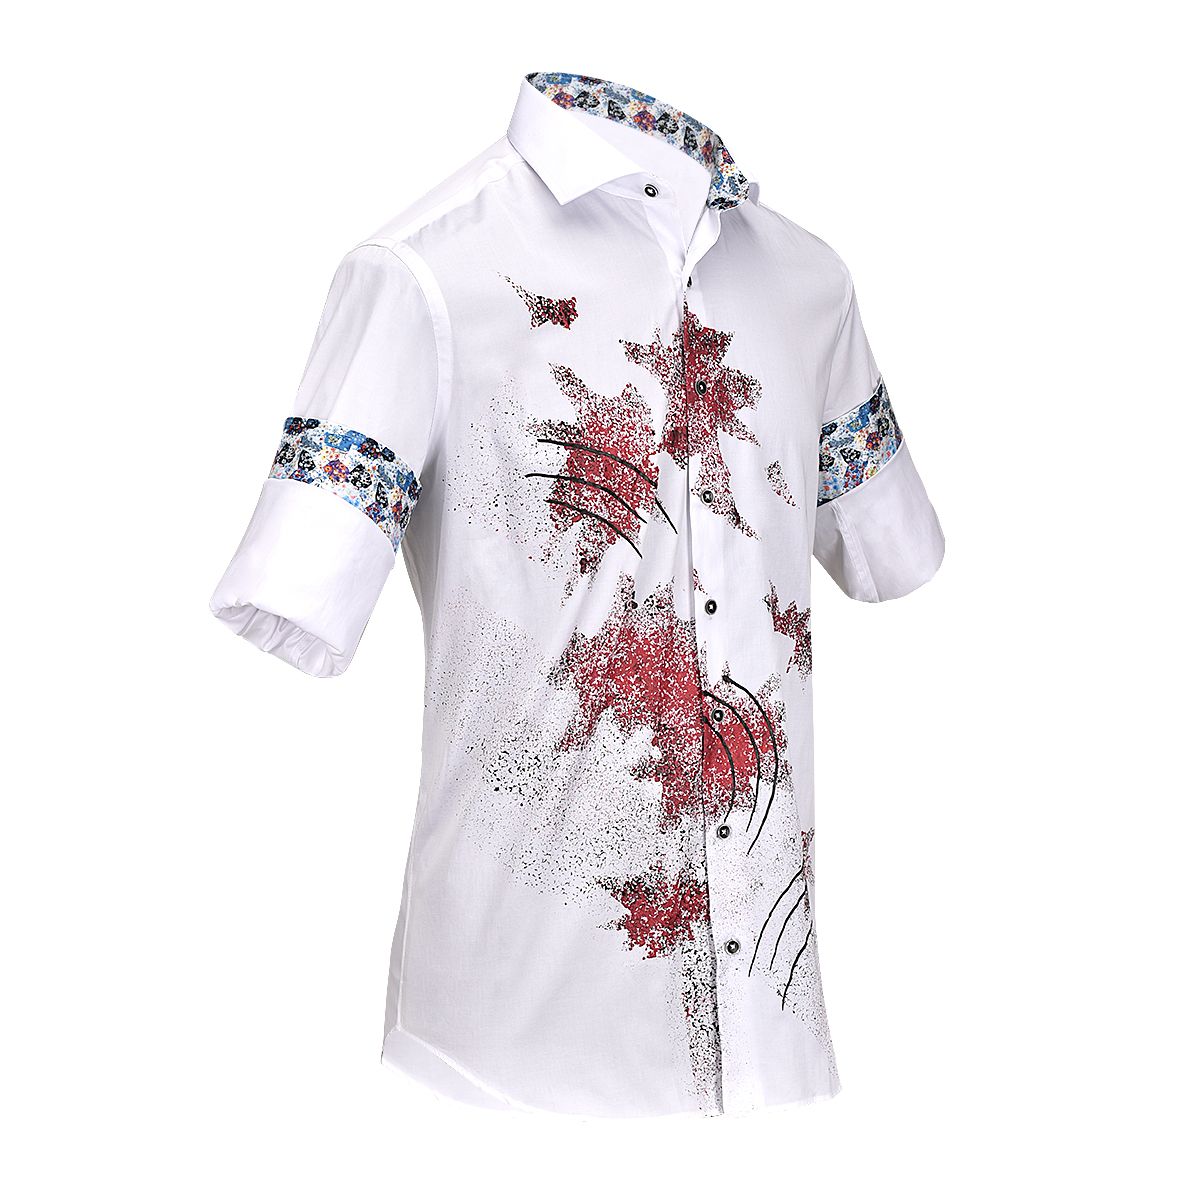 CM523V2 - Cuadra white casual fashion hand painted shirt for men-Kuet.us